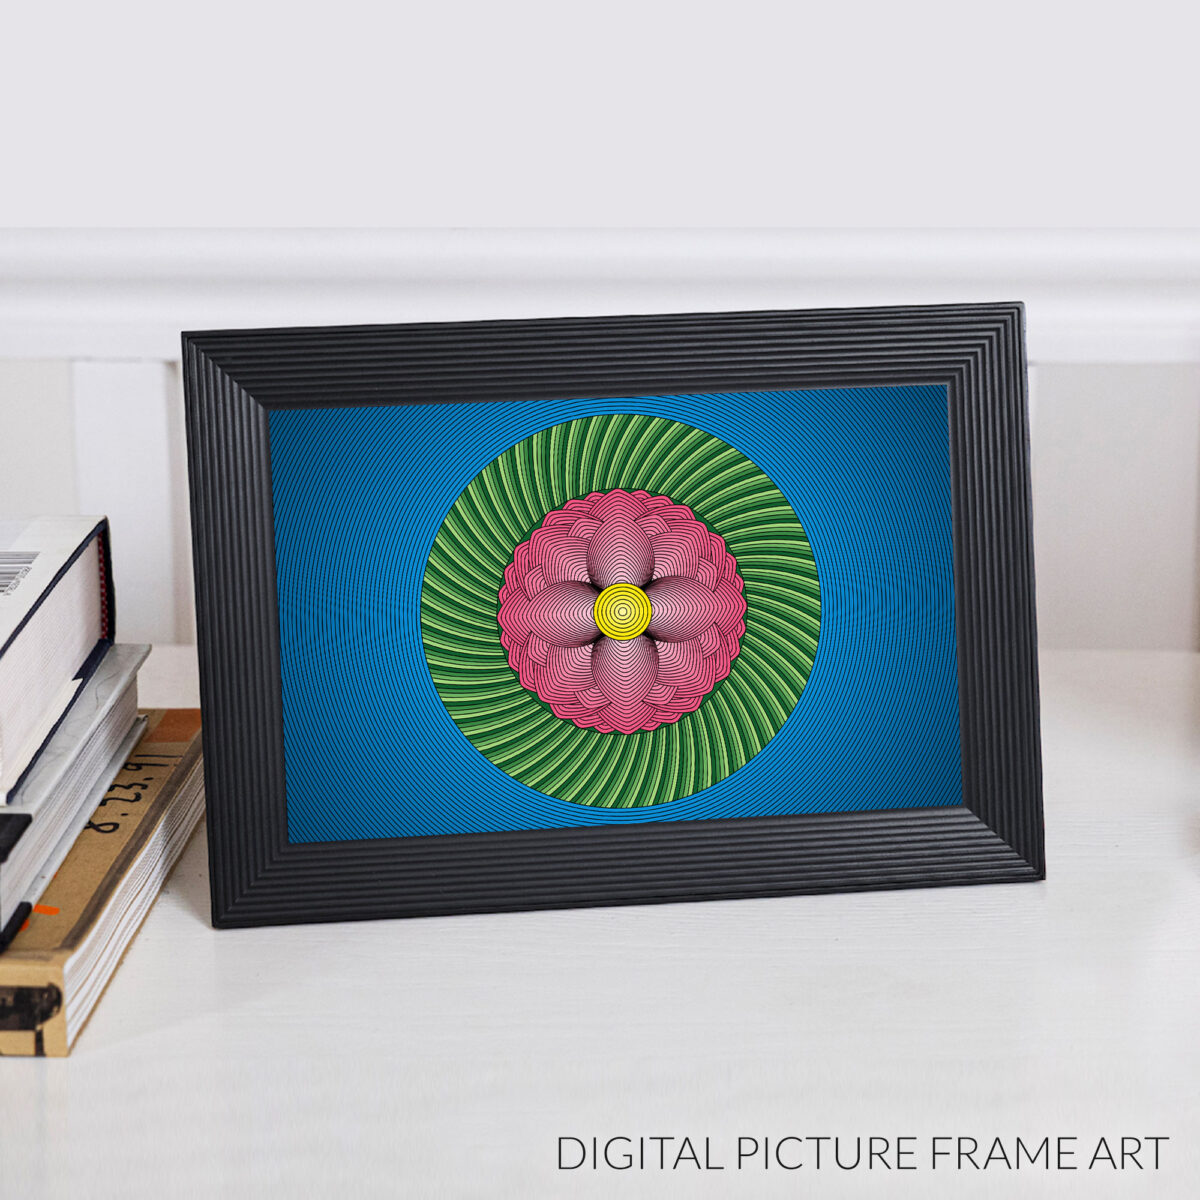 Lotus Flower digital wallpaper design in a digital picture frame.